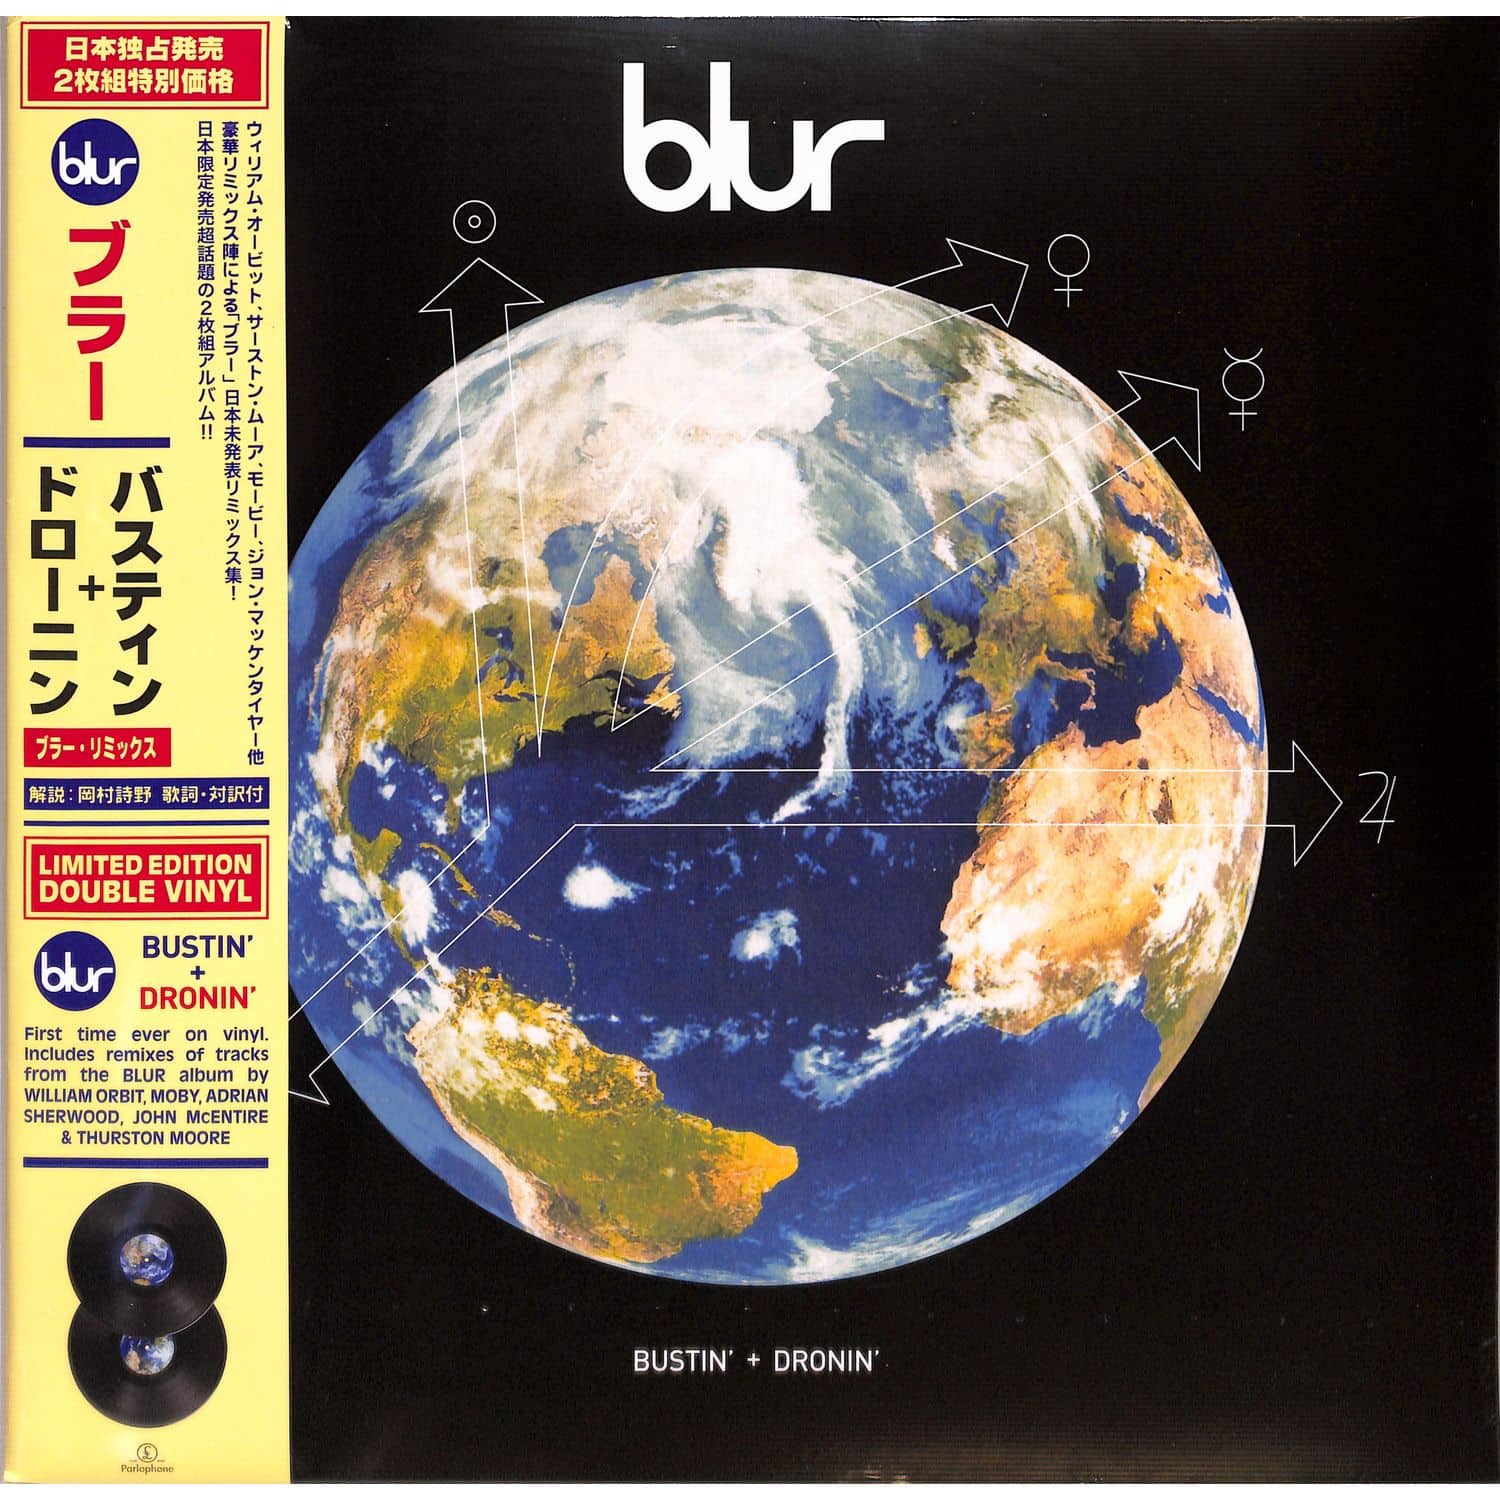 Blur - BUSTIN + DRONIN 